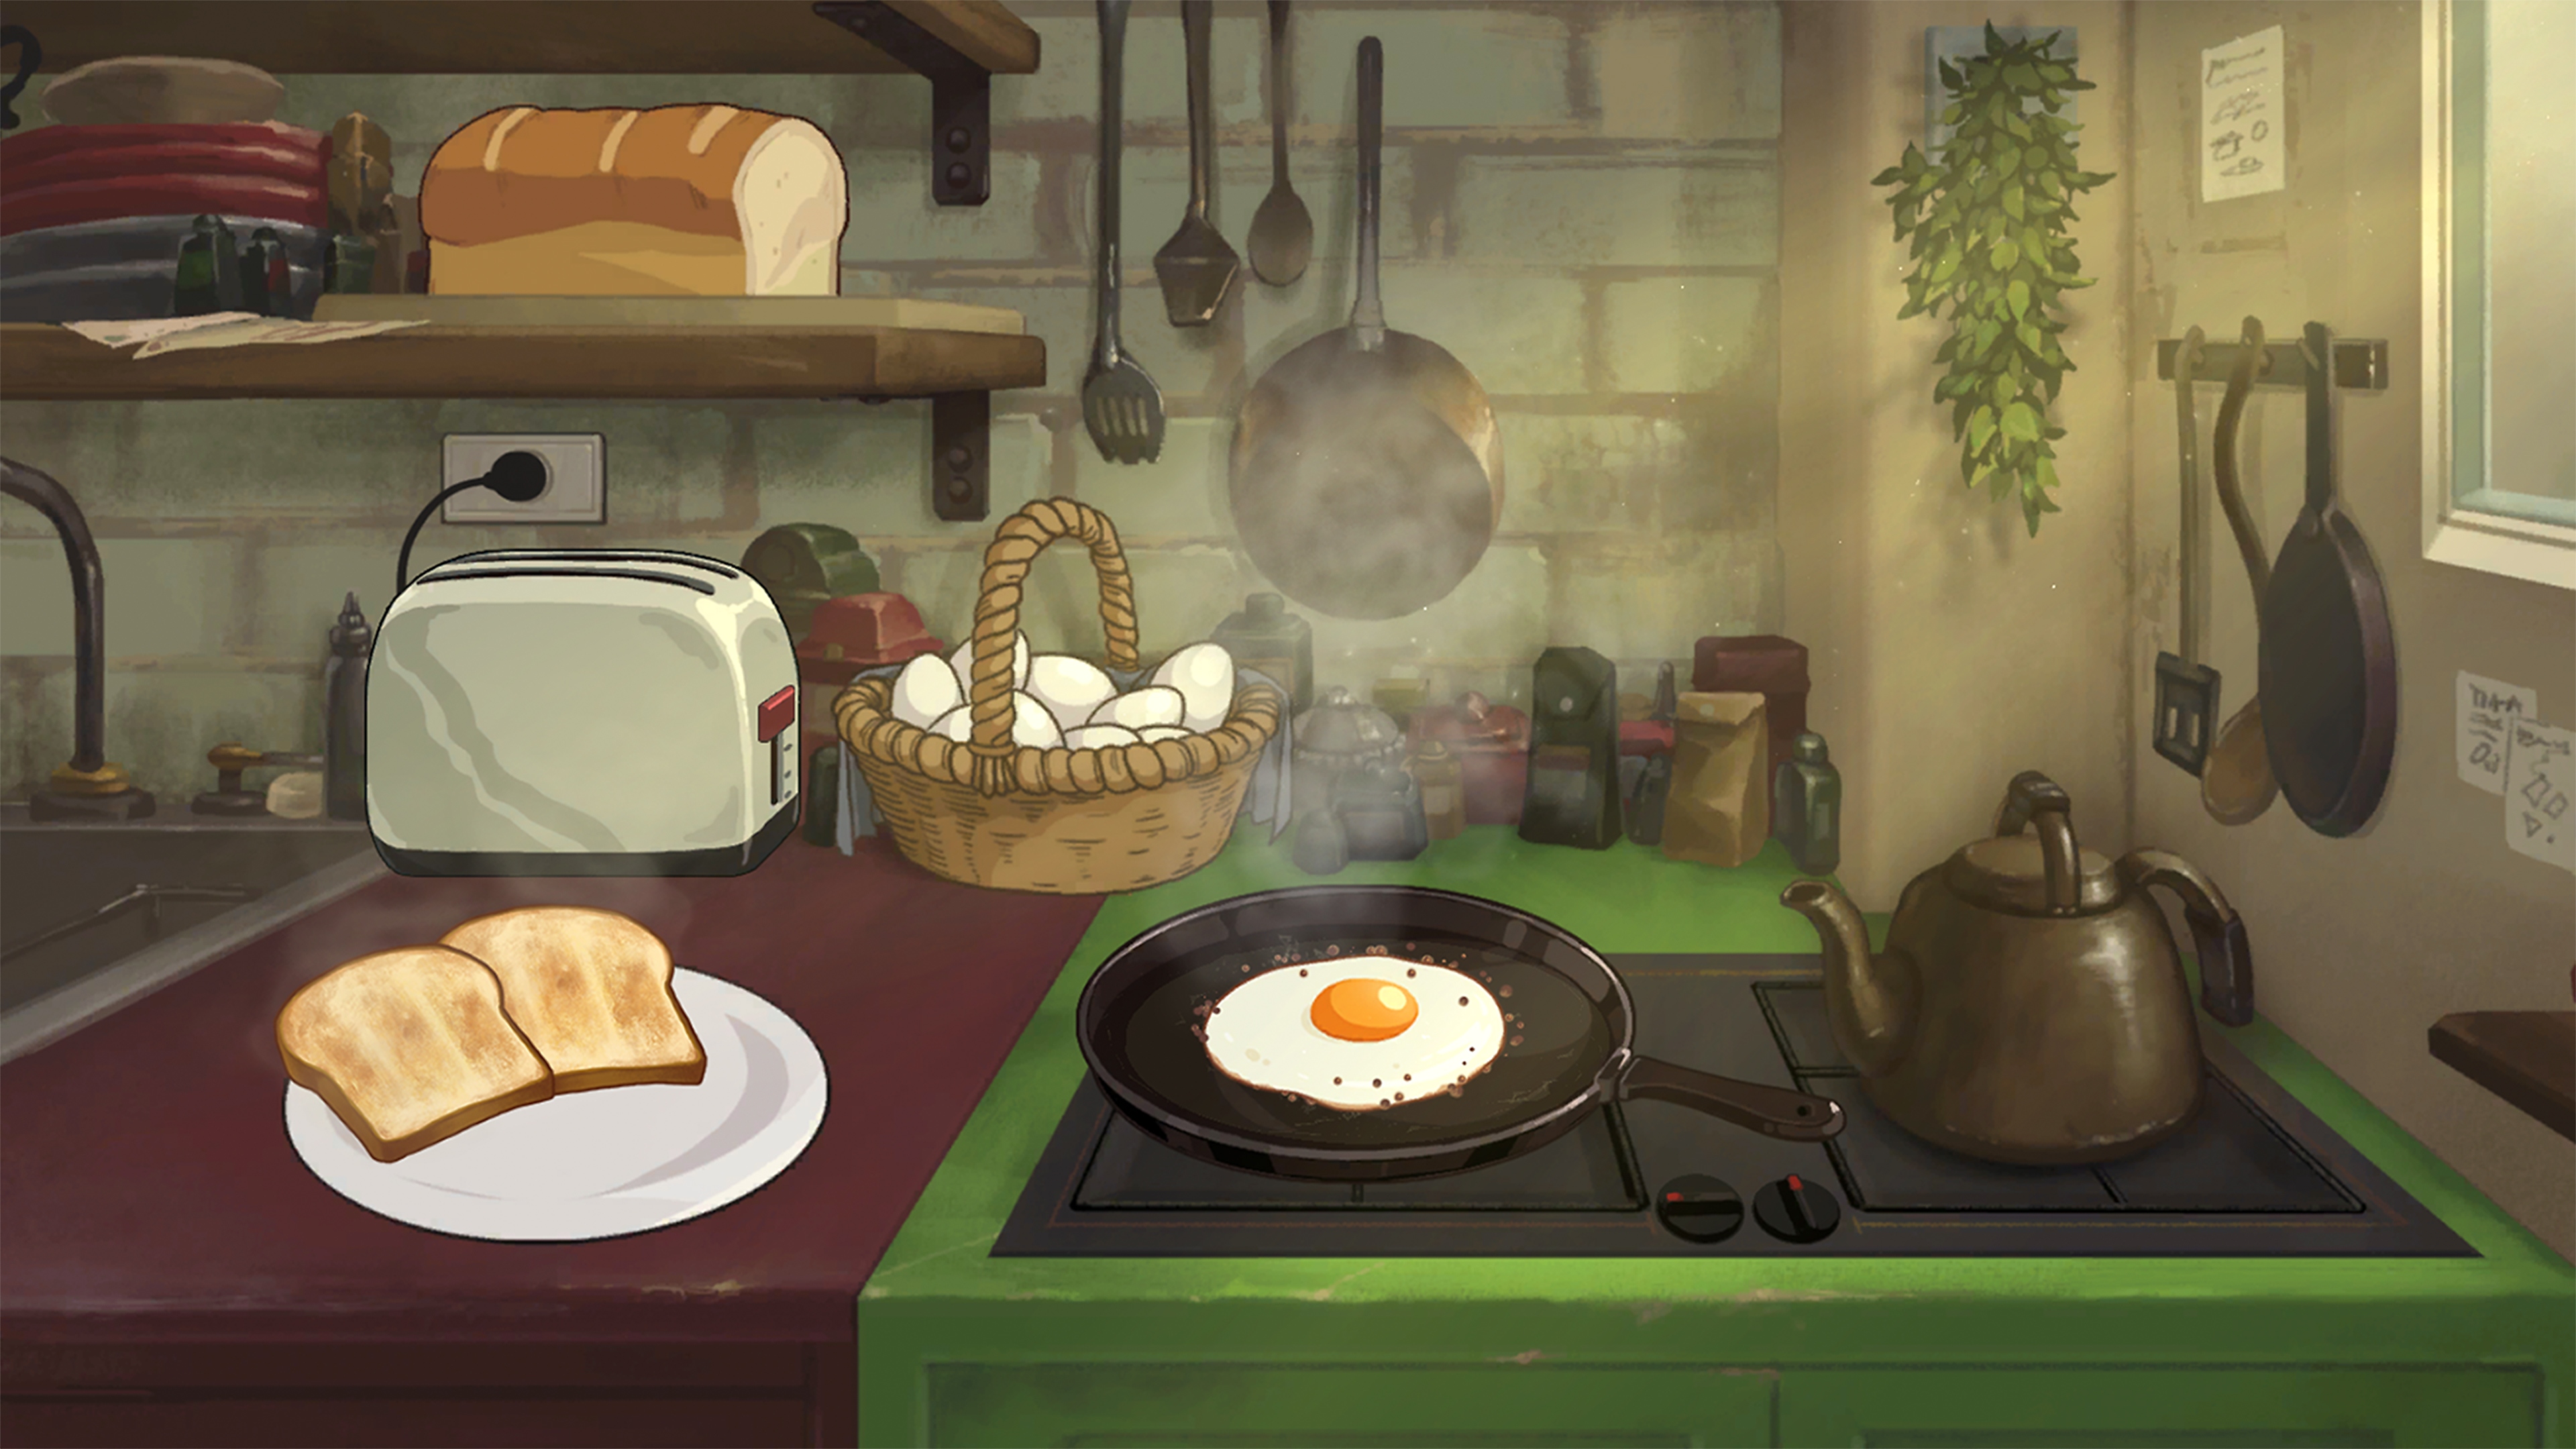 Behind the Frame: The Finest Scenery에서 스토브로 아침 식사를 준비하는 모습의 스크린샷